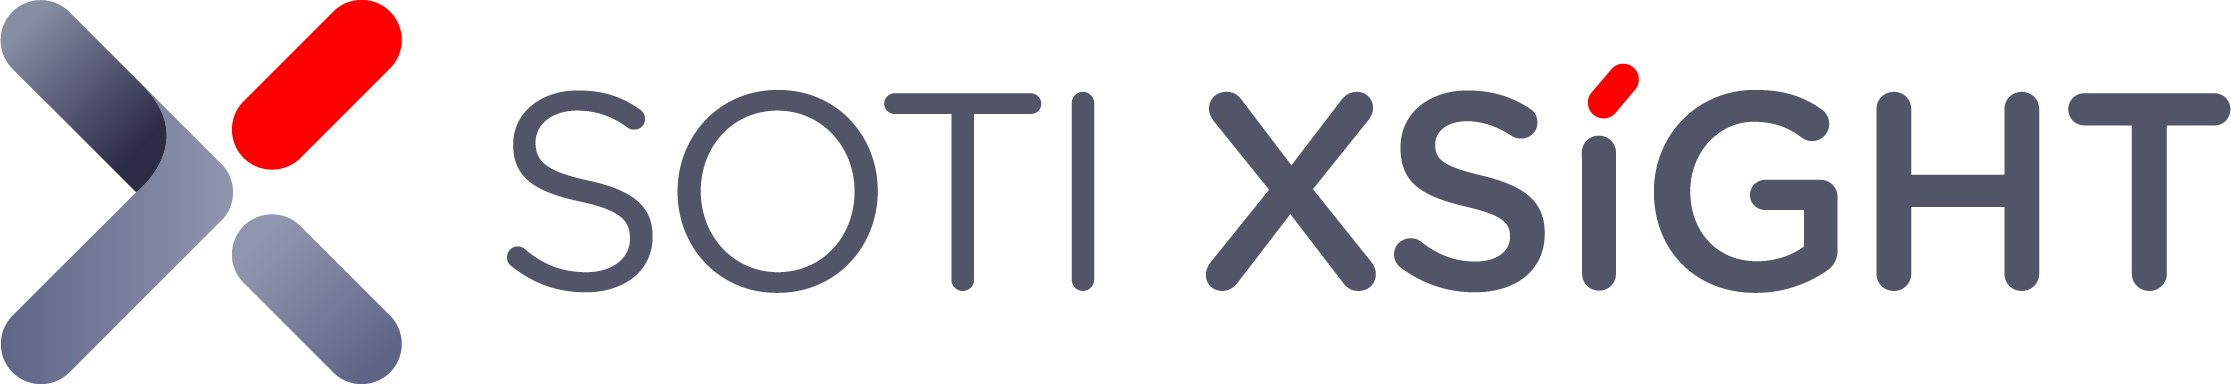 SOTI XSight logo